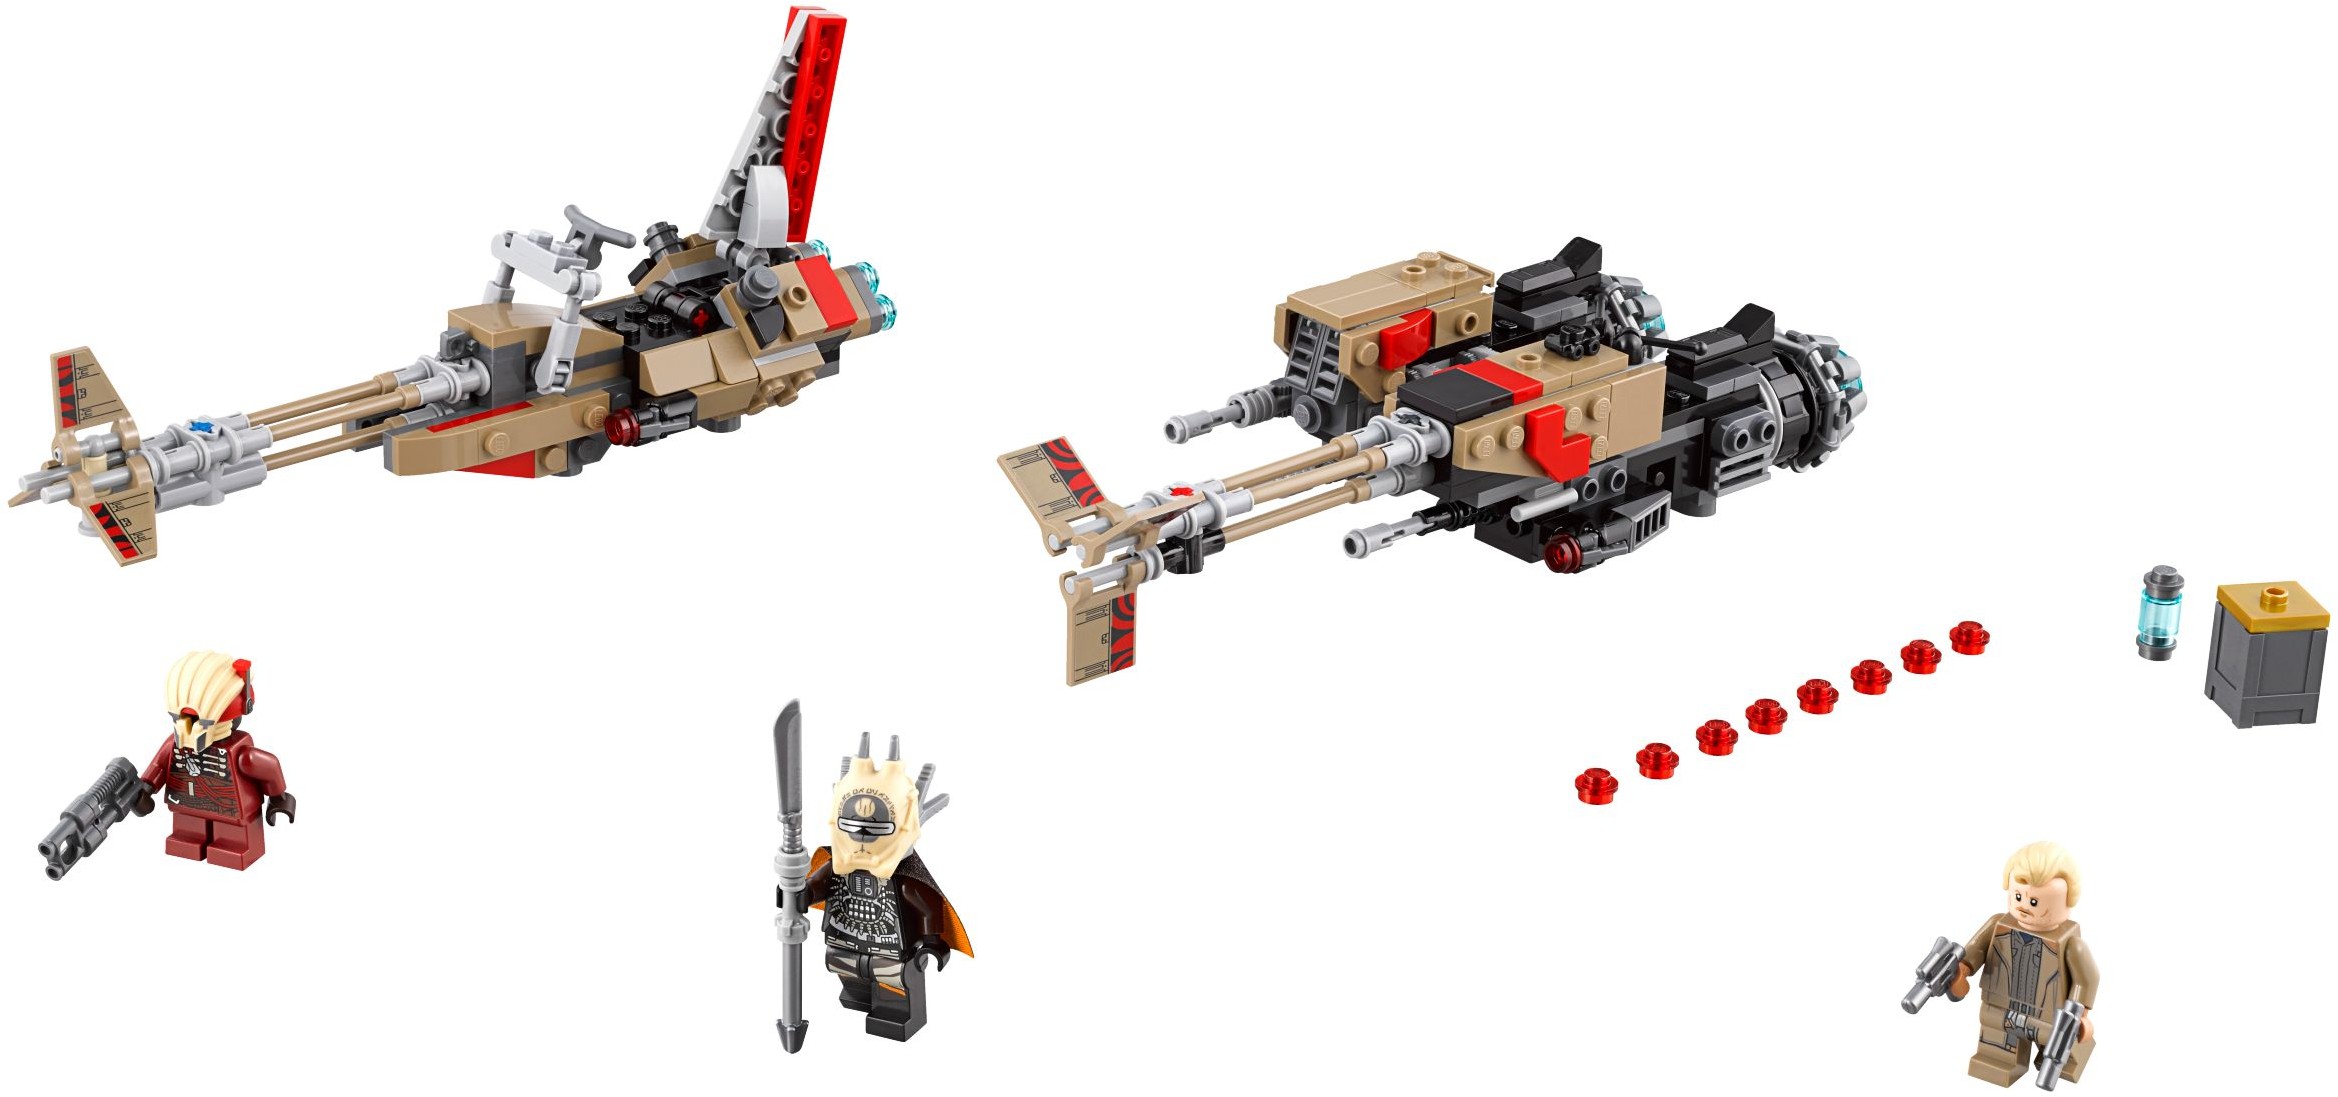 Wars | Solo | Brickset: LEGO guide and database